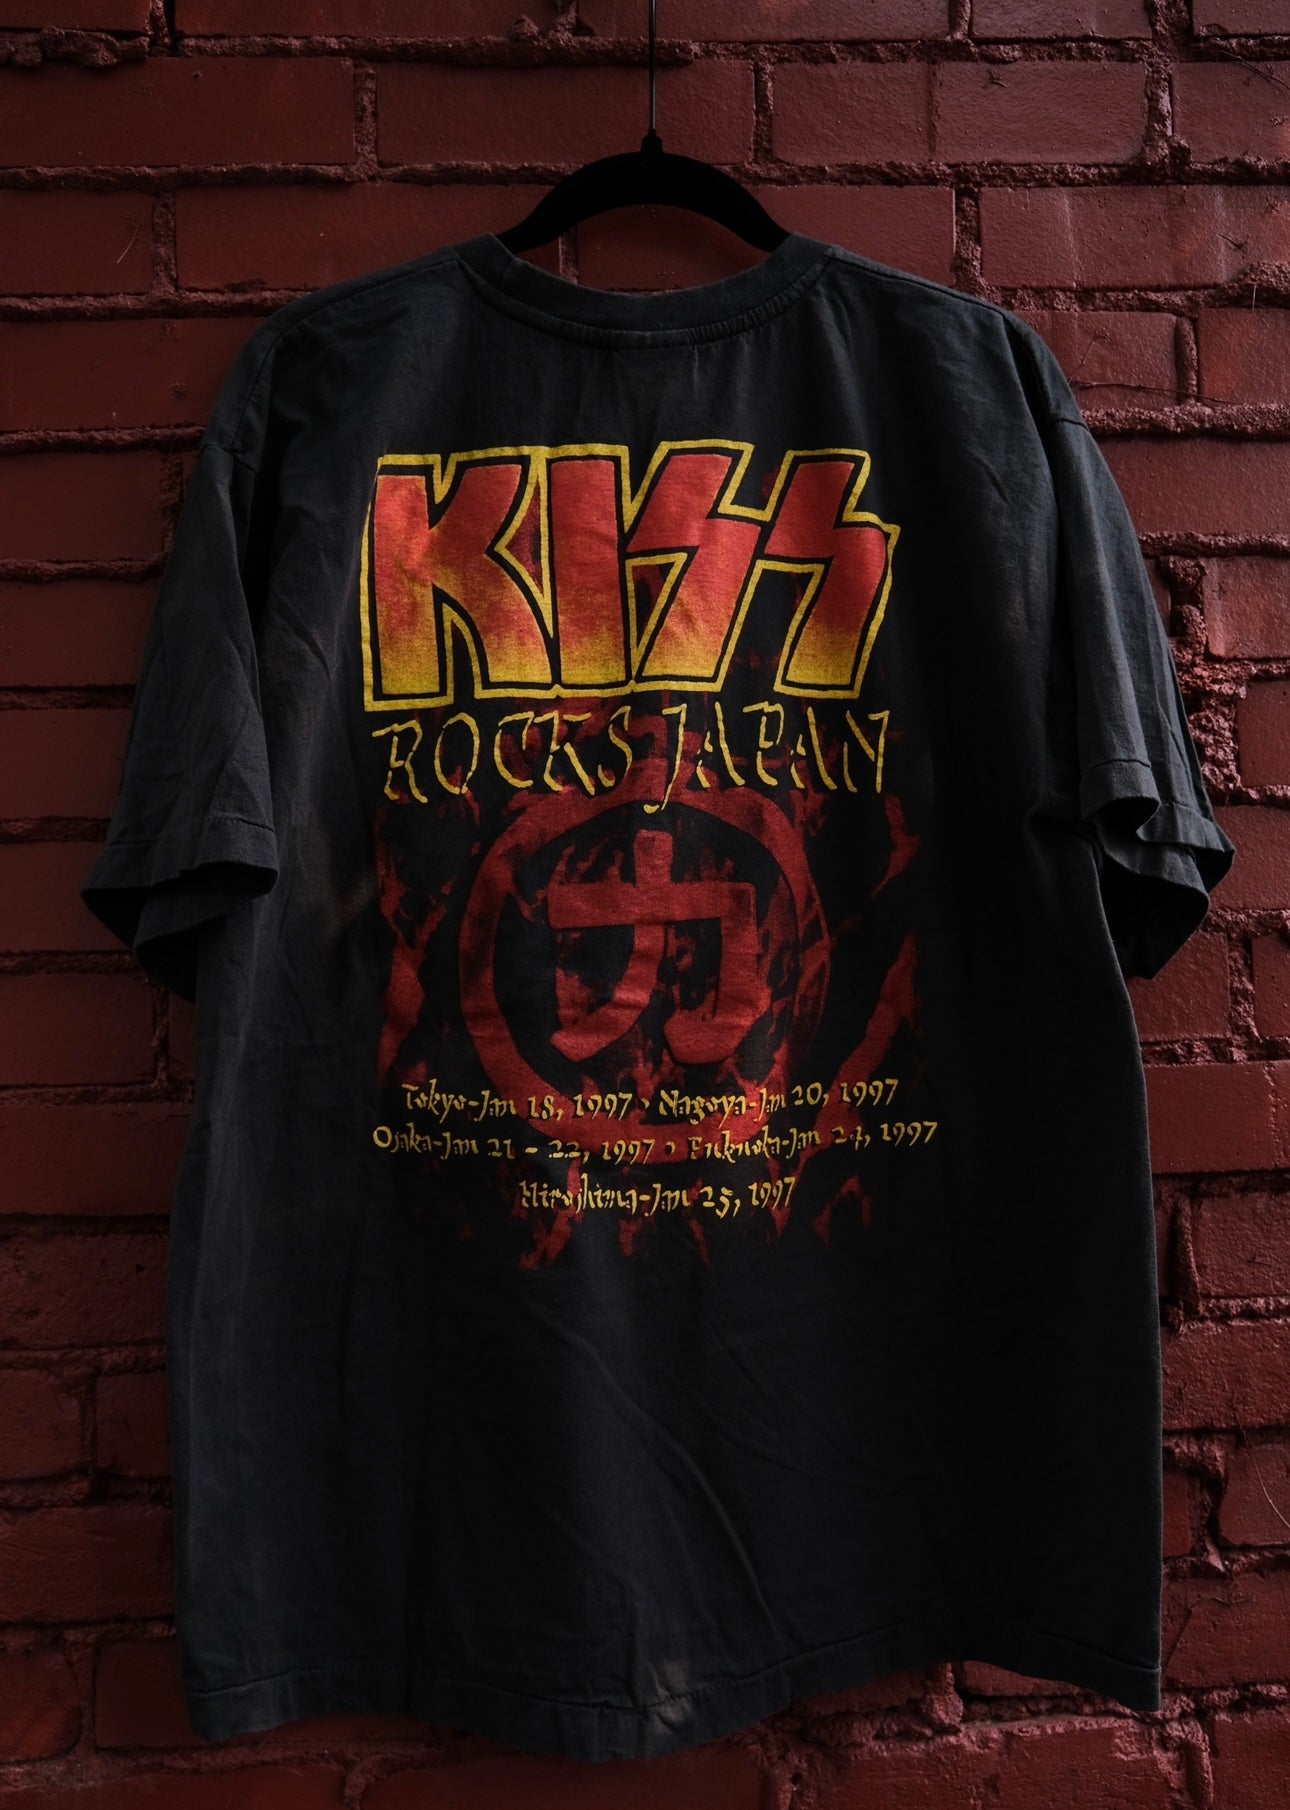 Kiss Rocks Japan (Alive/Worldwide) Tour Tee